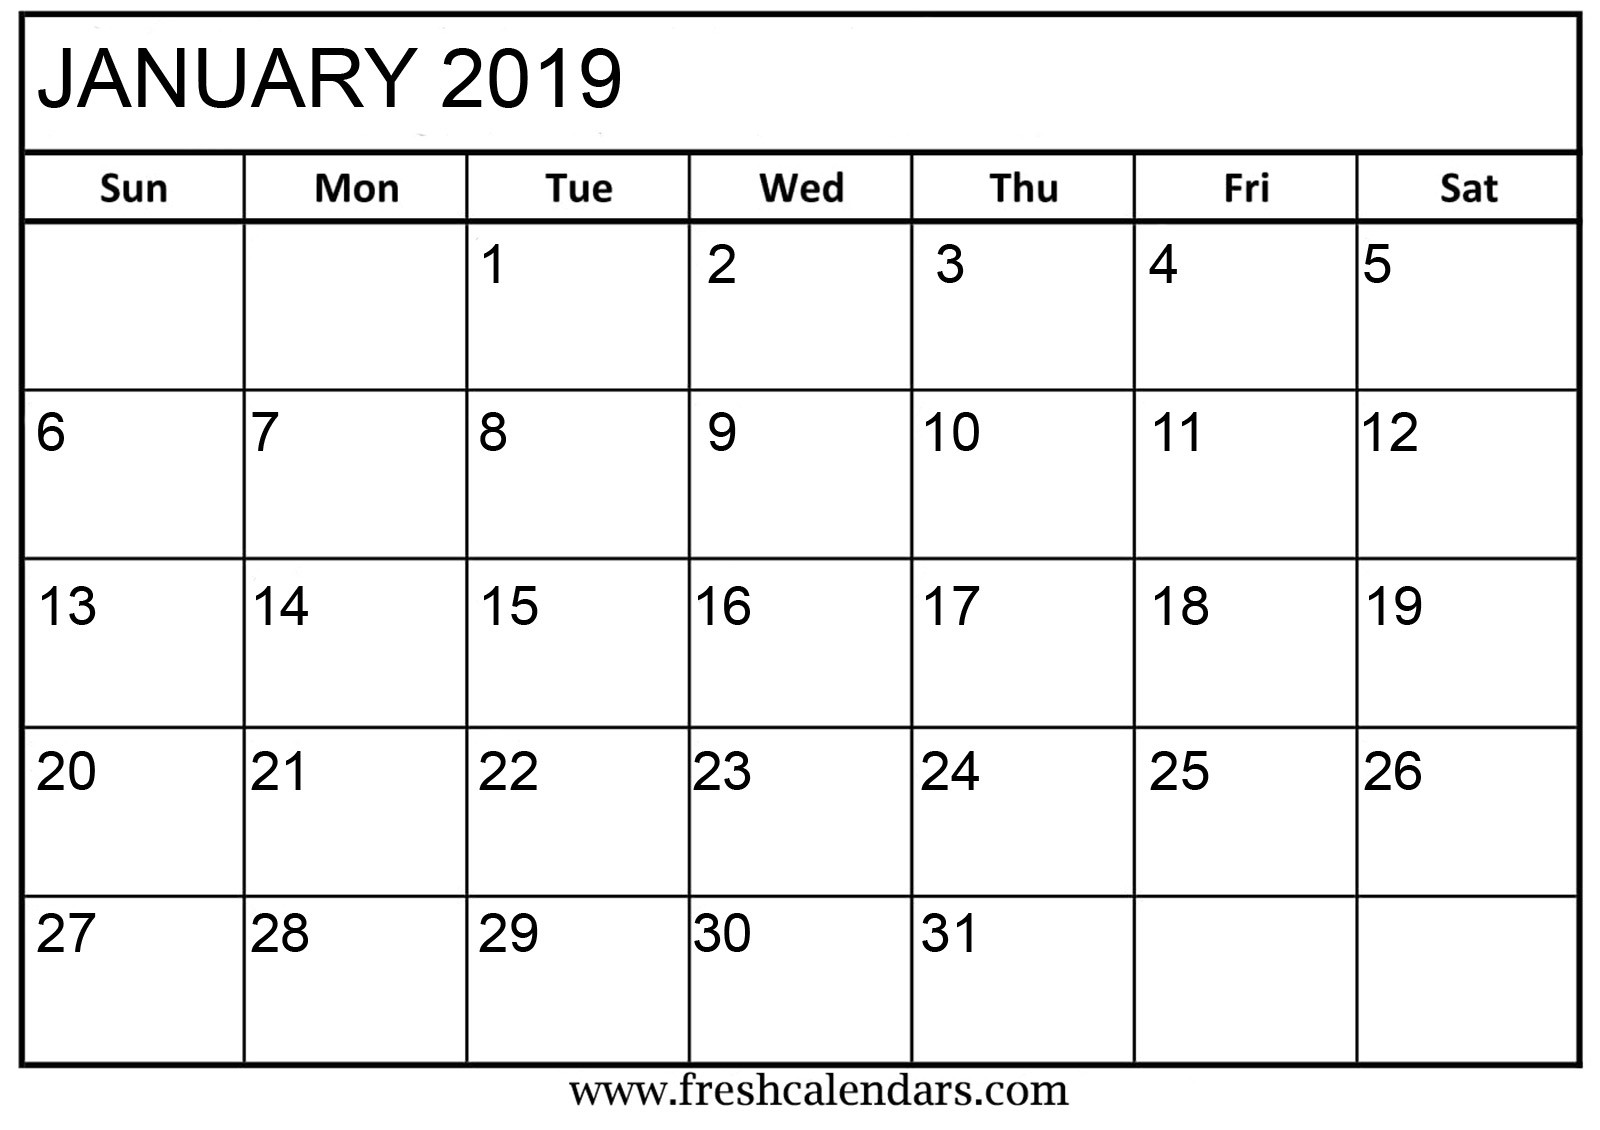 January 2019 Calendar Printable Fresh Calendars